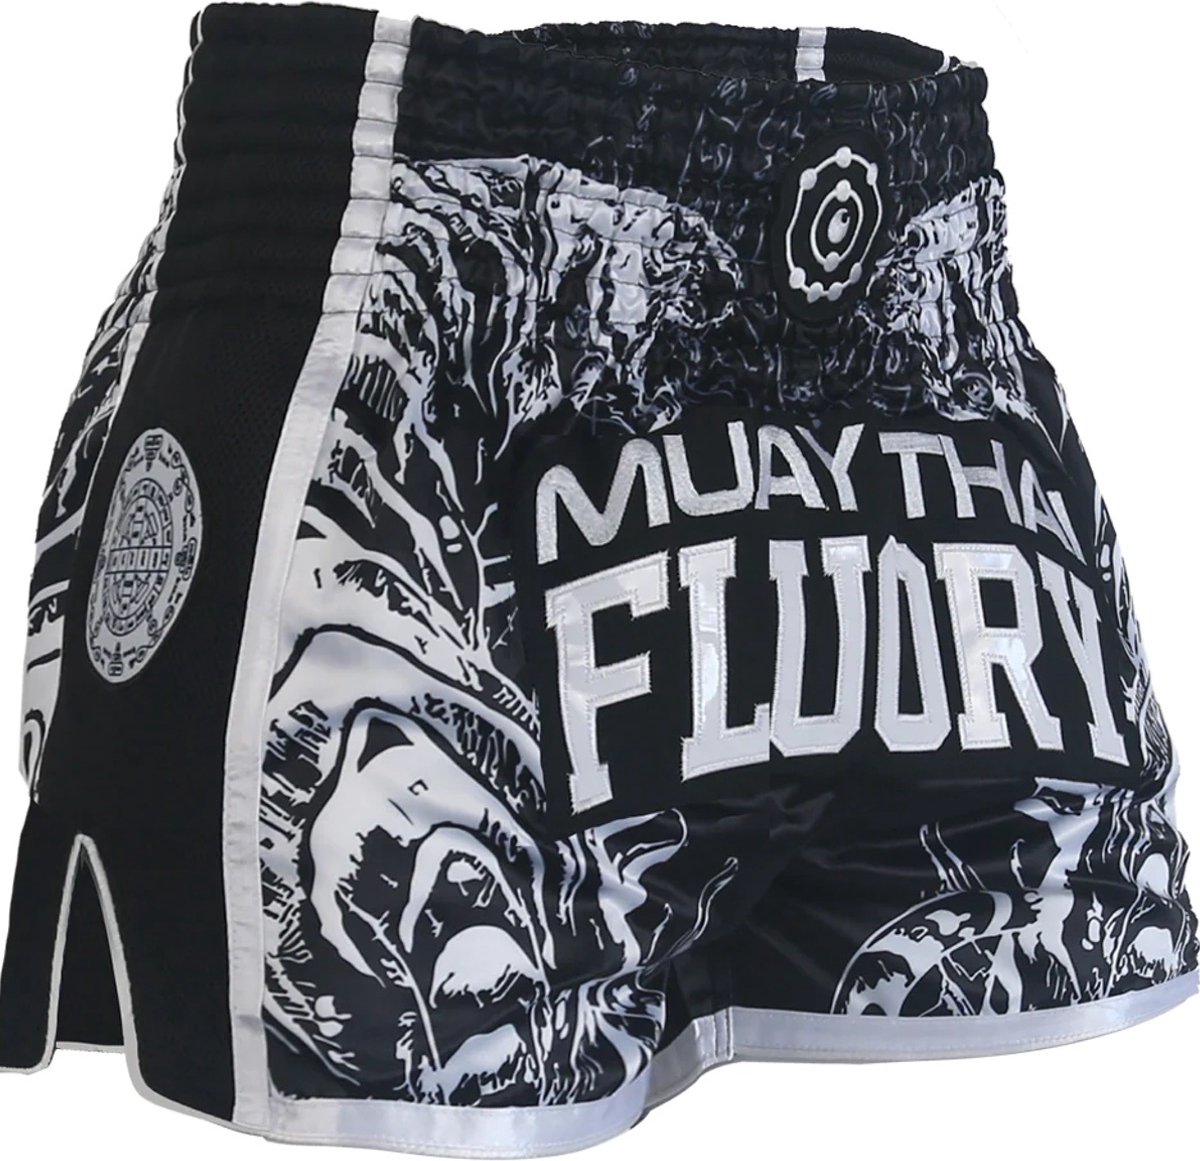 Fluory Sak Yant Tiger Muay Thai Kickboks Broek Zwart maat XL